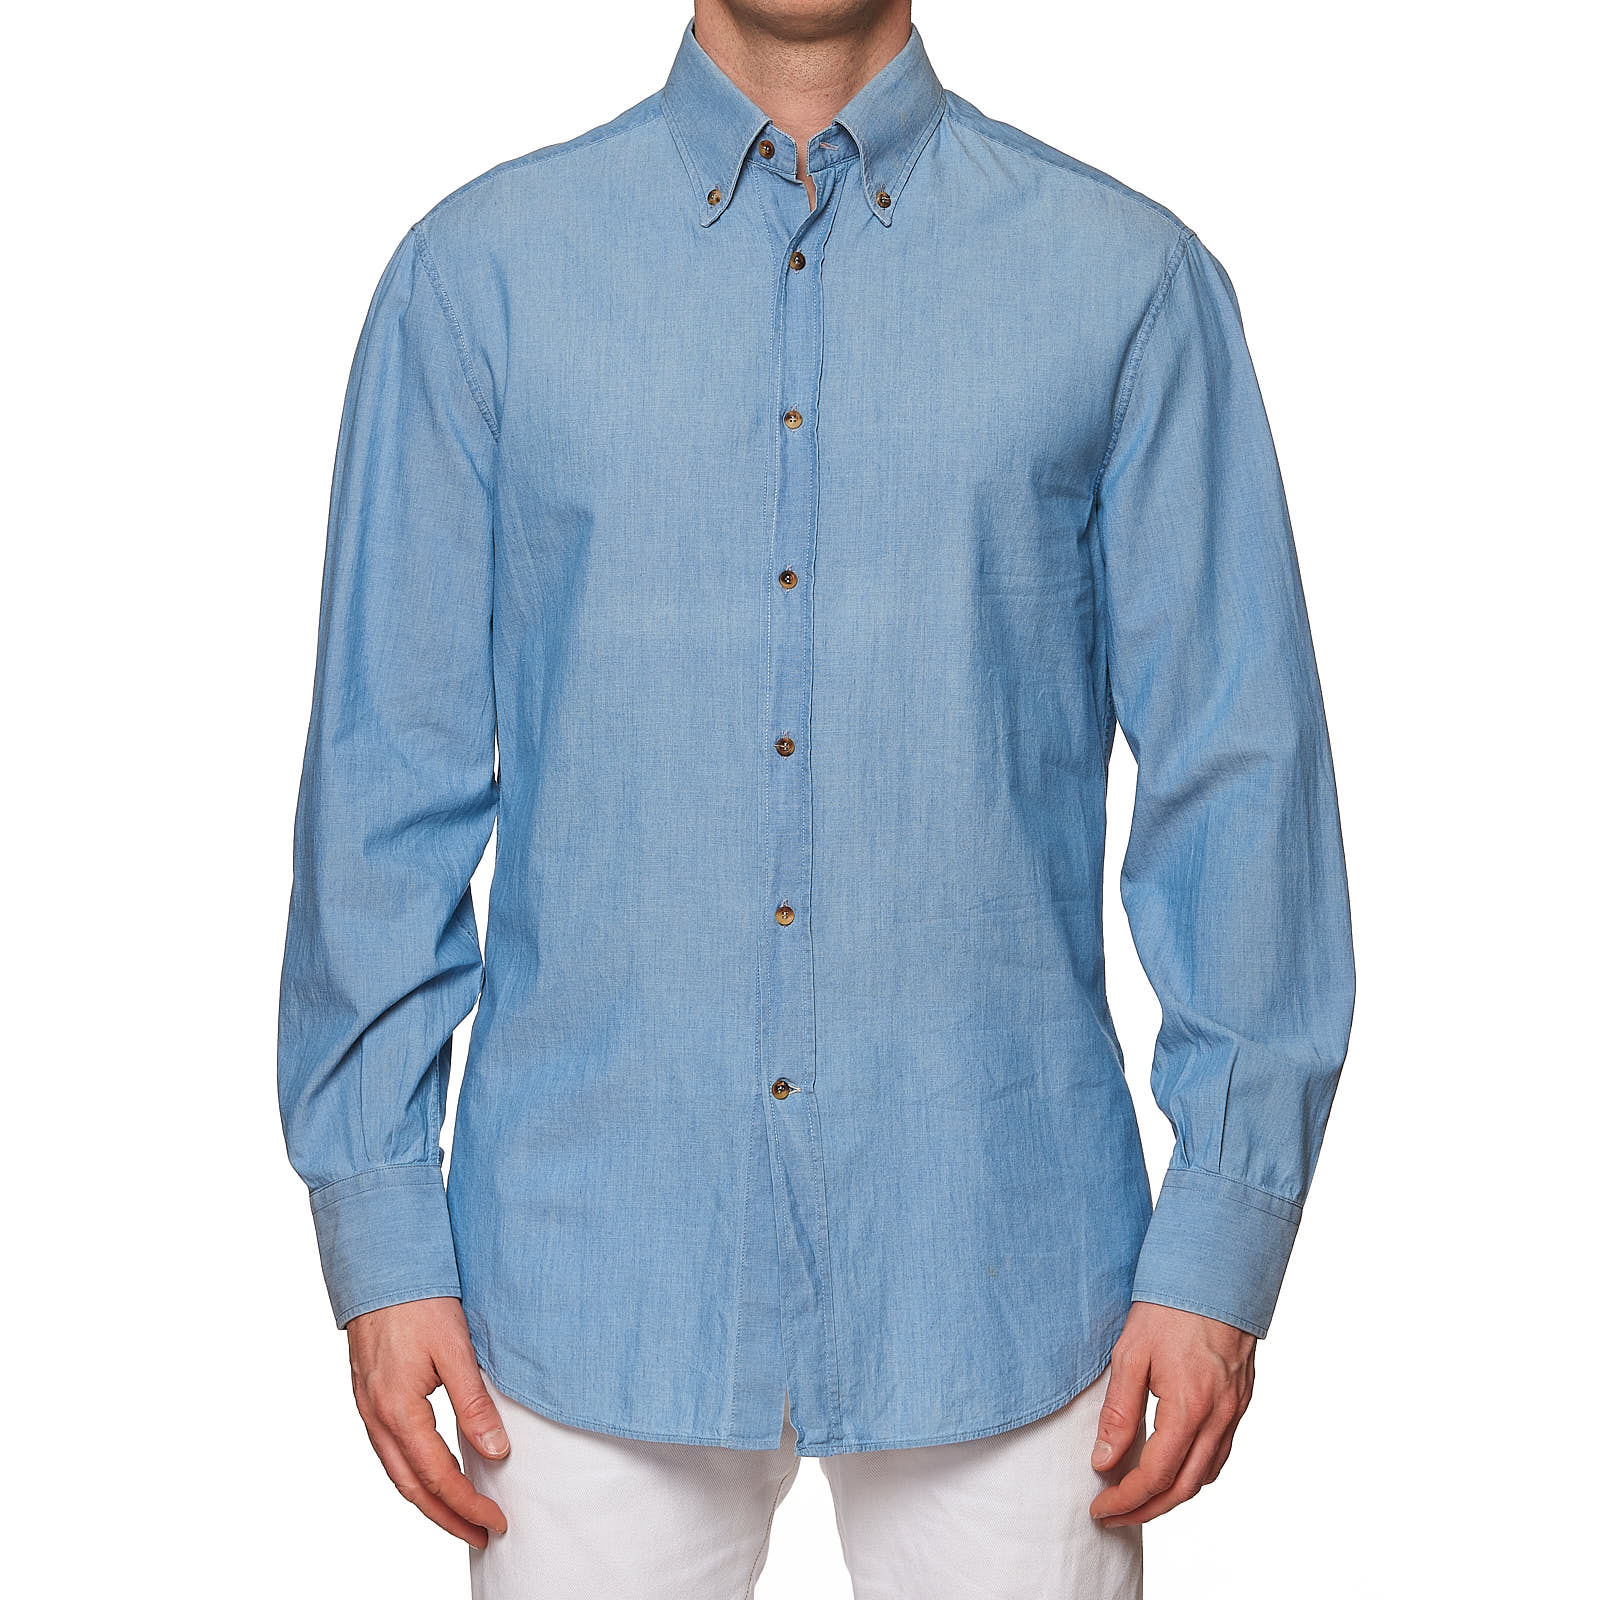 BRUNELLO CUCINELLI Blue Cotton Button-Down Collar Basic Fit Casual Shirt L BRUNELLO CUCINELLI